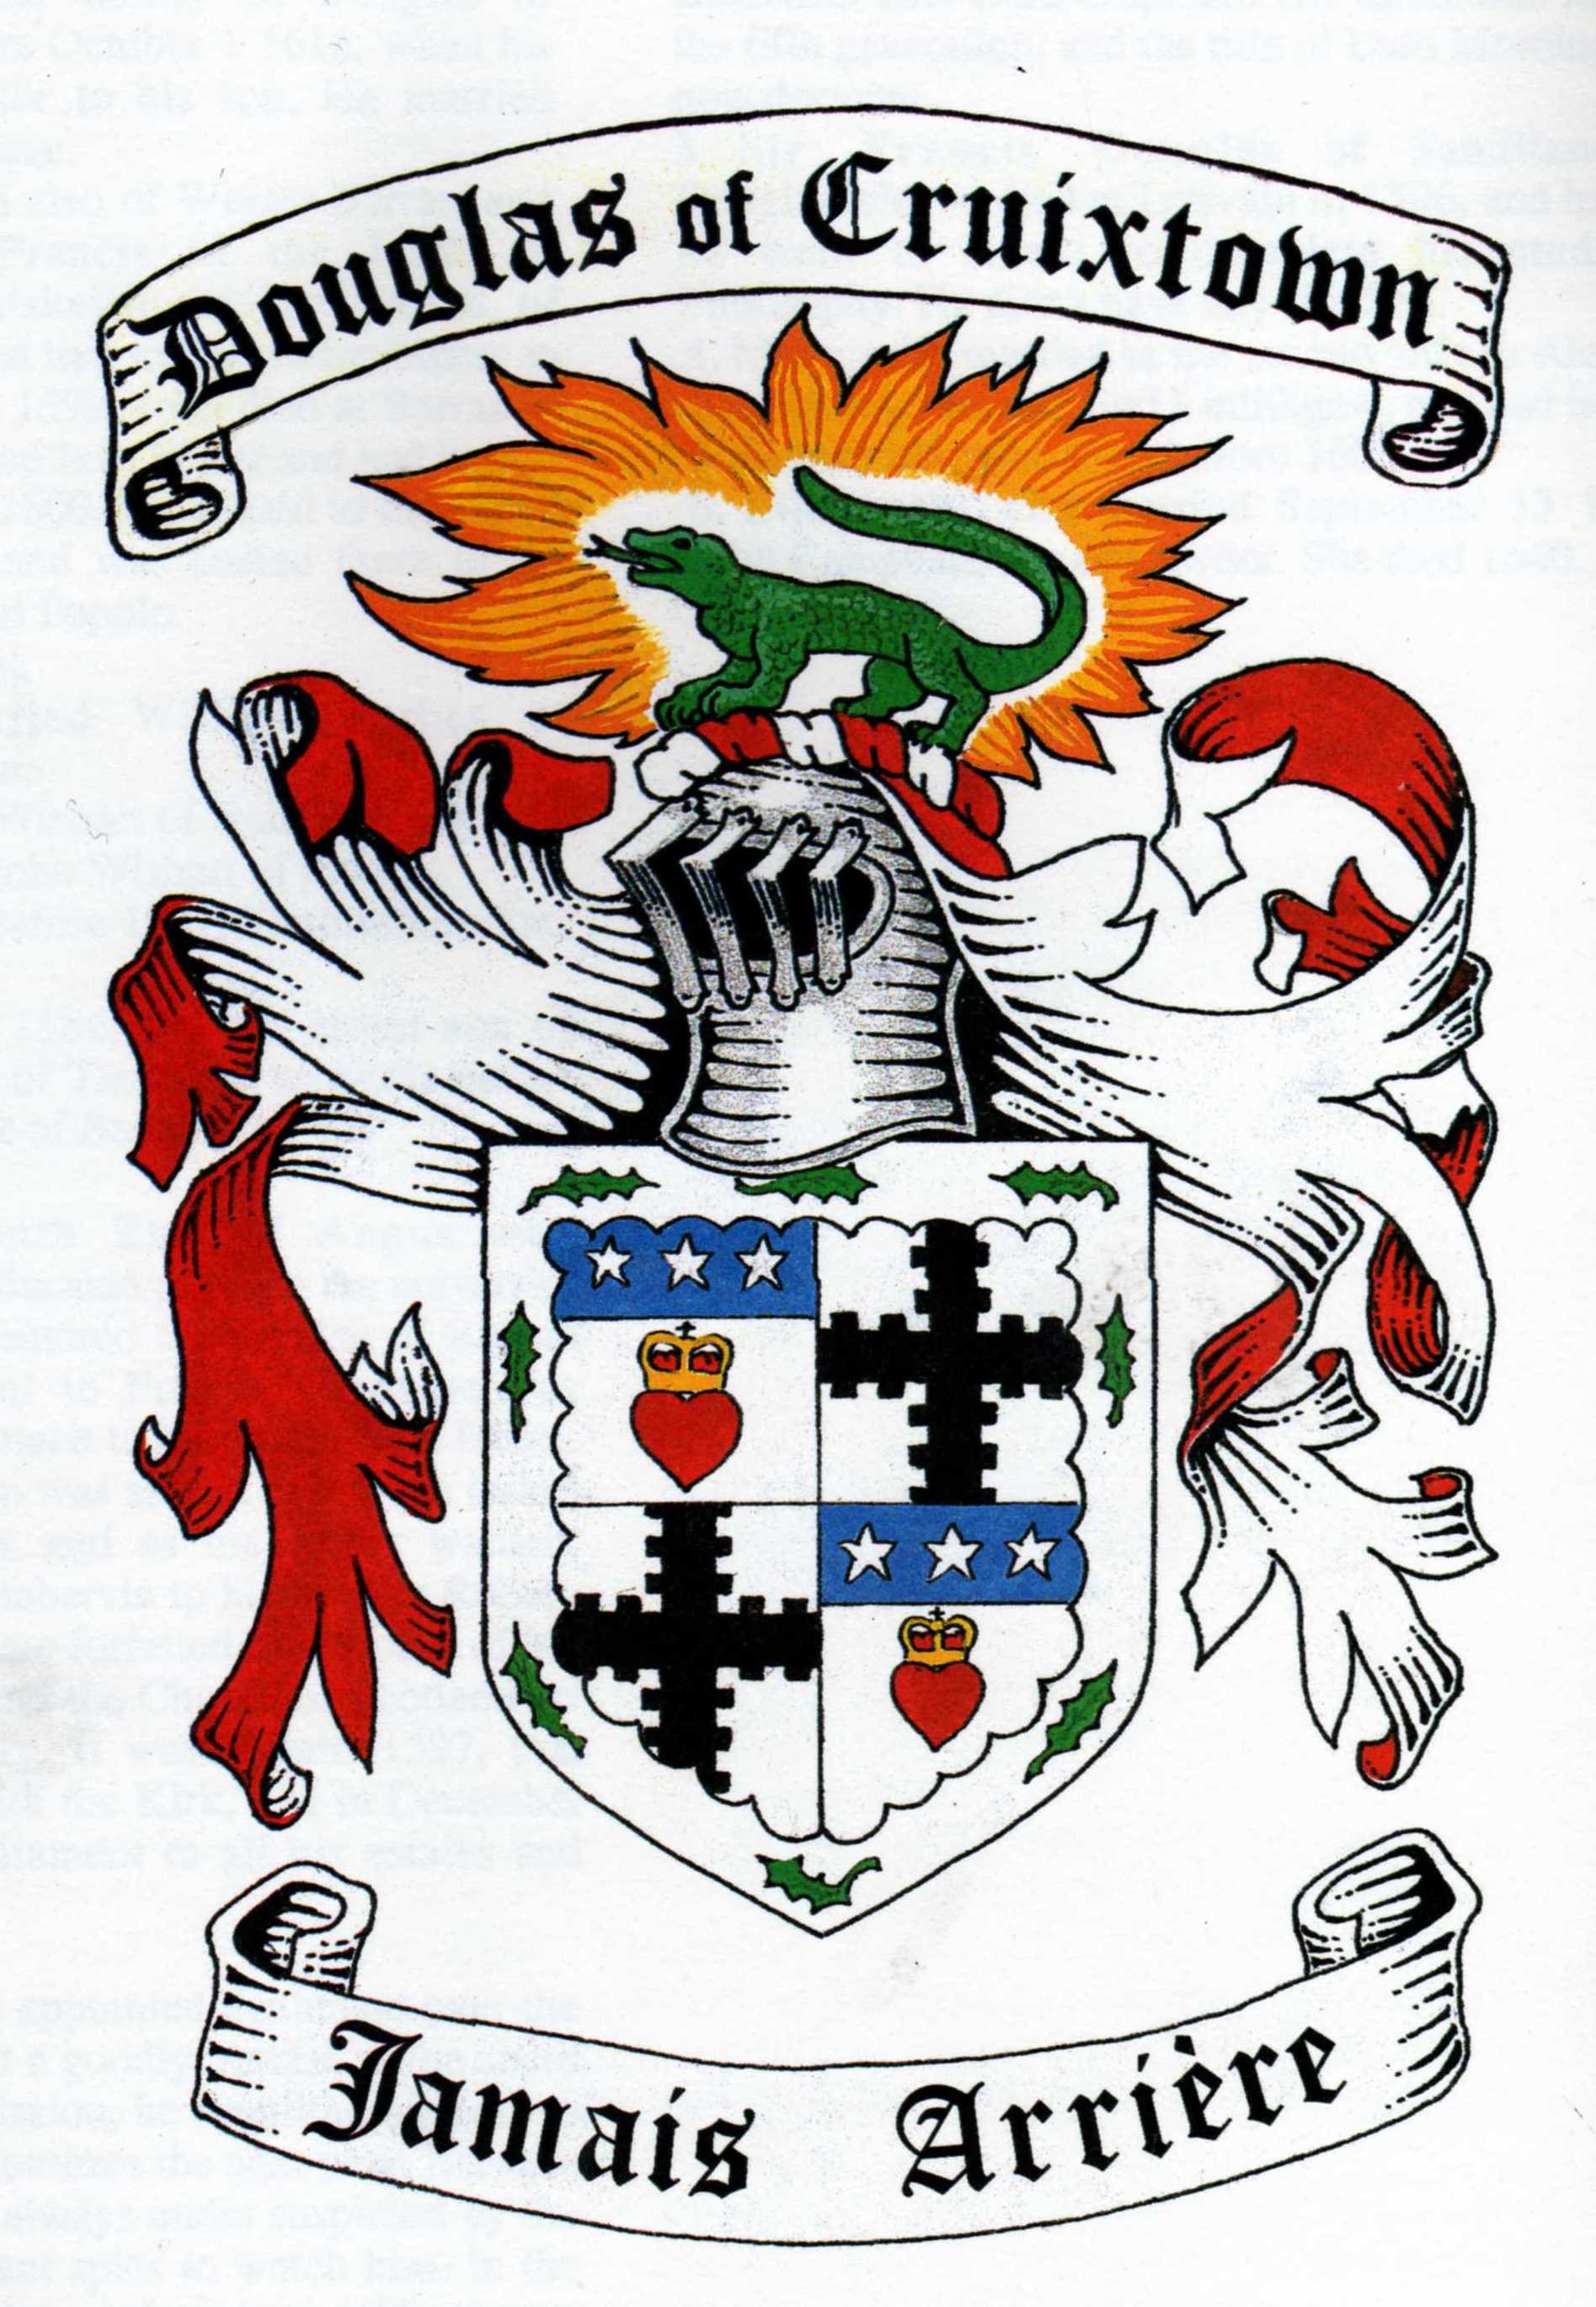 Crookston coat of arms